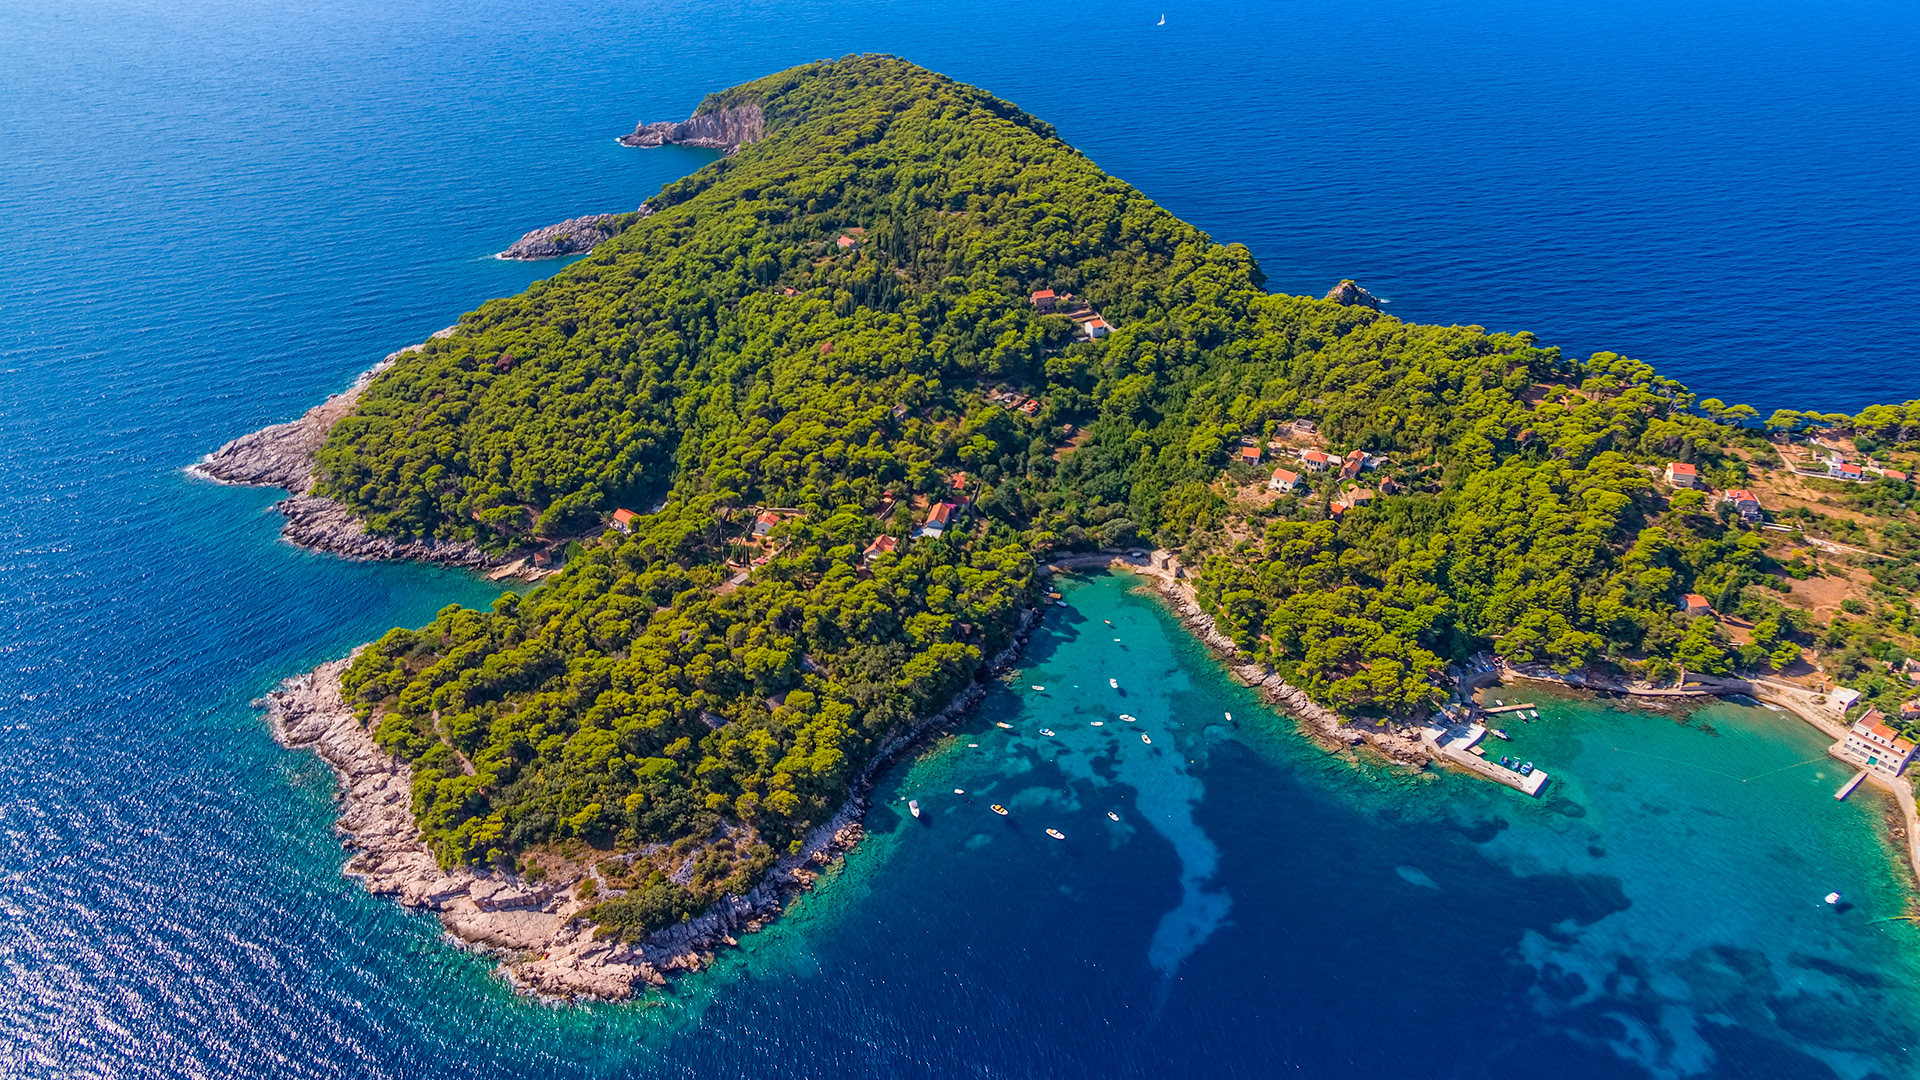 Kolocep island, Elaphiti archipelago, Croatia